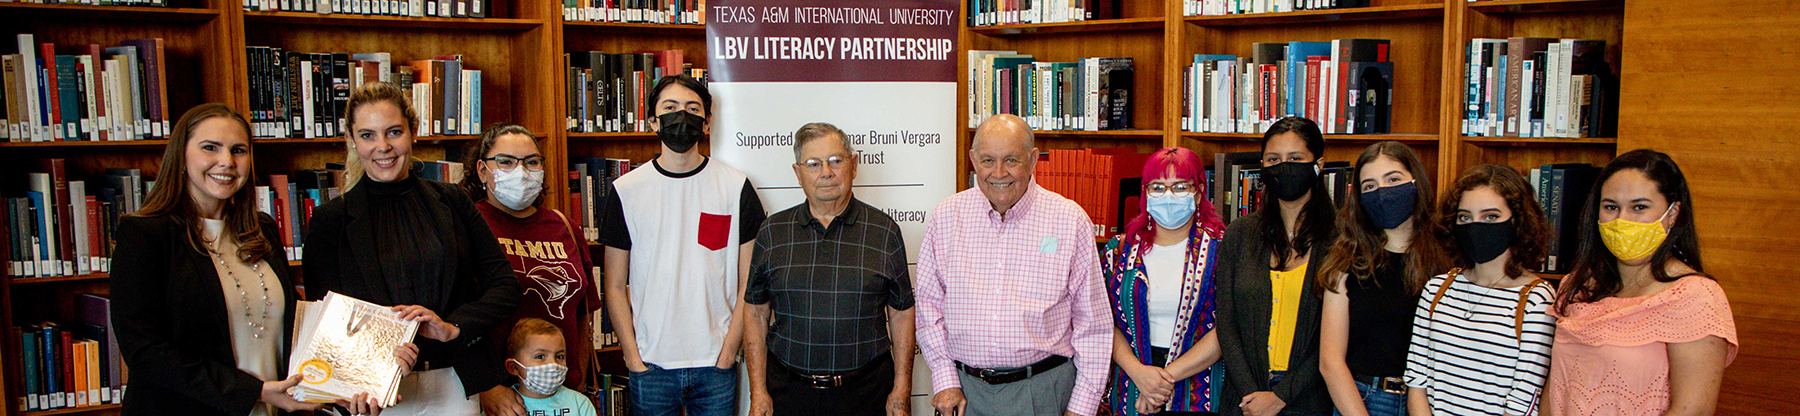 LBV Literacy Partnership Group Photo